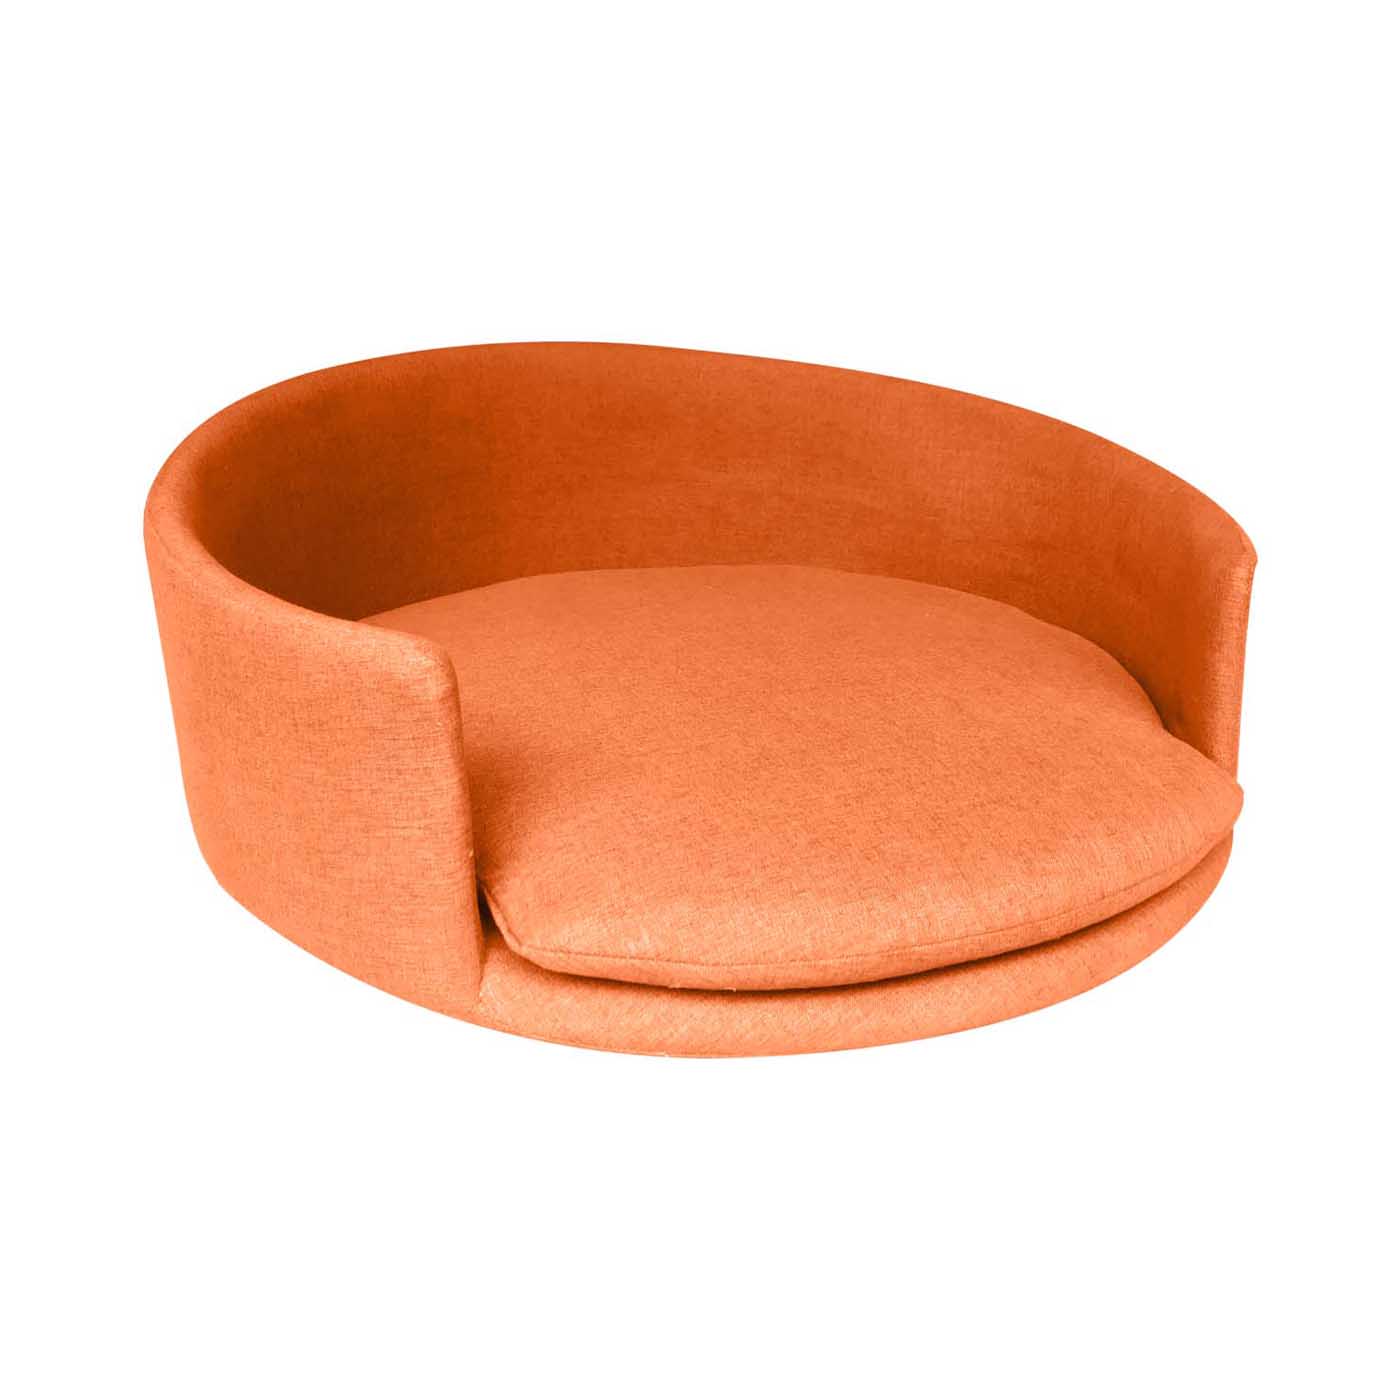 The Orange Huisdier Pet Bed